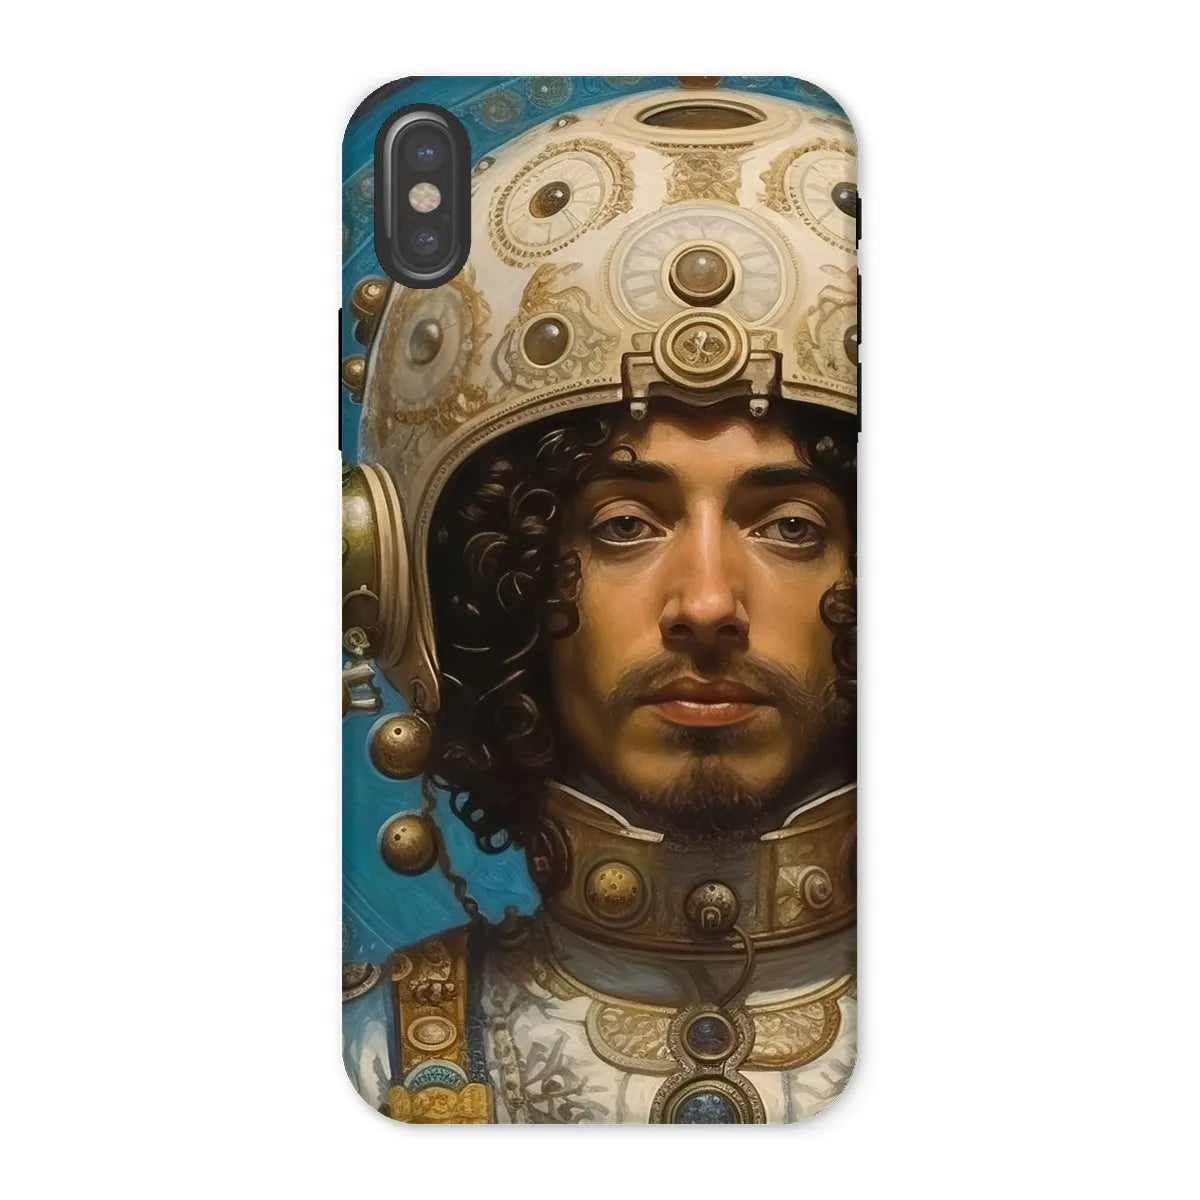 Mehdi The Gay Astronaut - Lgbtq Art Phone Case - Iphone x / Matte - Mobile Phone Cases - Aesthetic Art